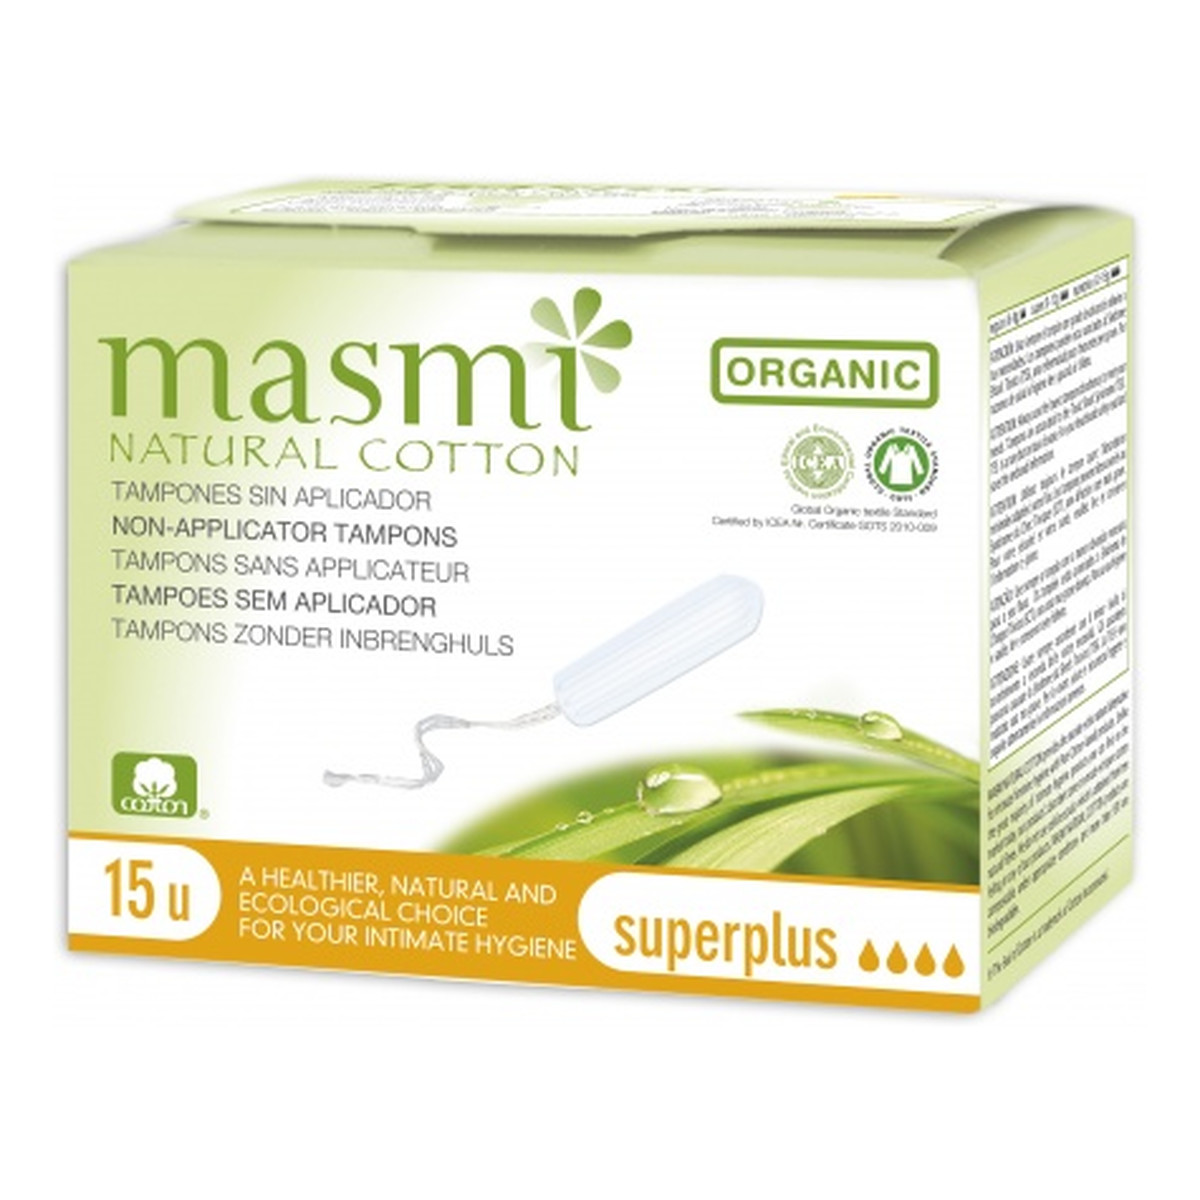 MASMI Tampony Super Plus - 15 szt (bez aplikatora) 15 szt.